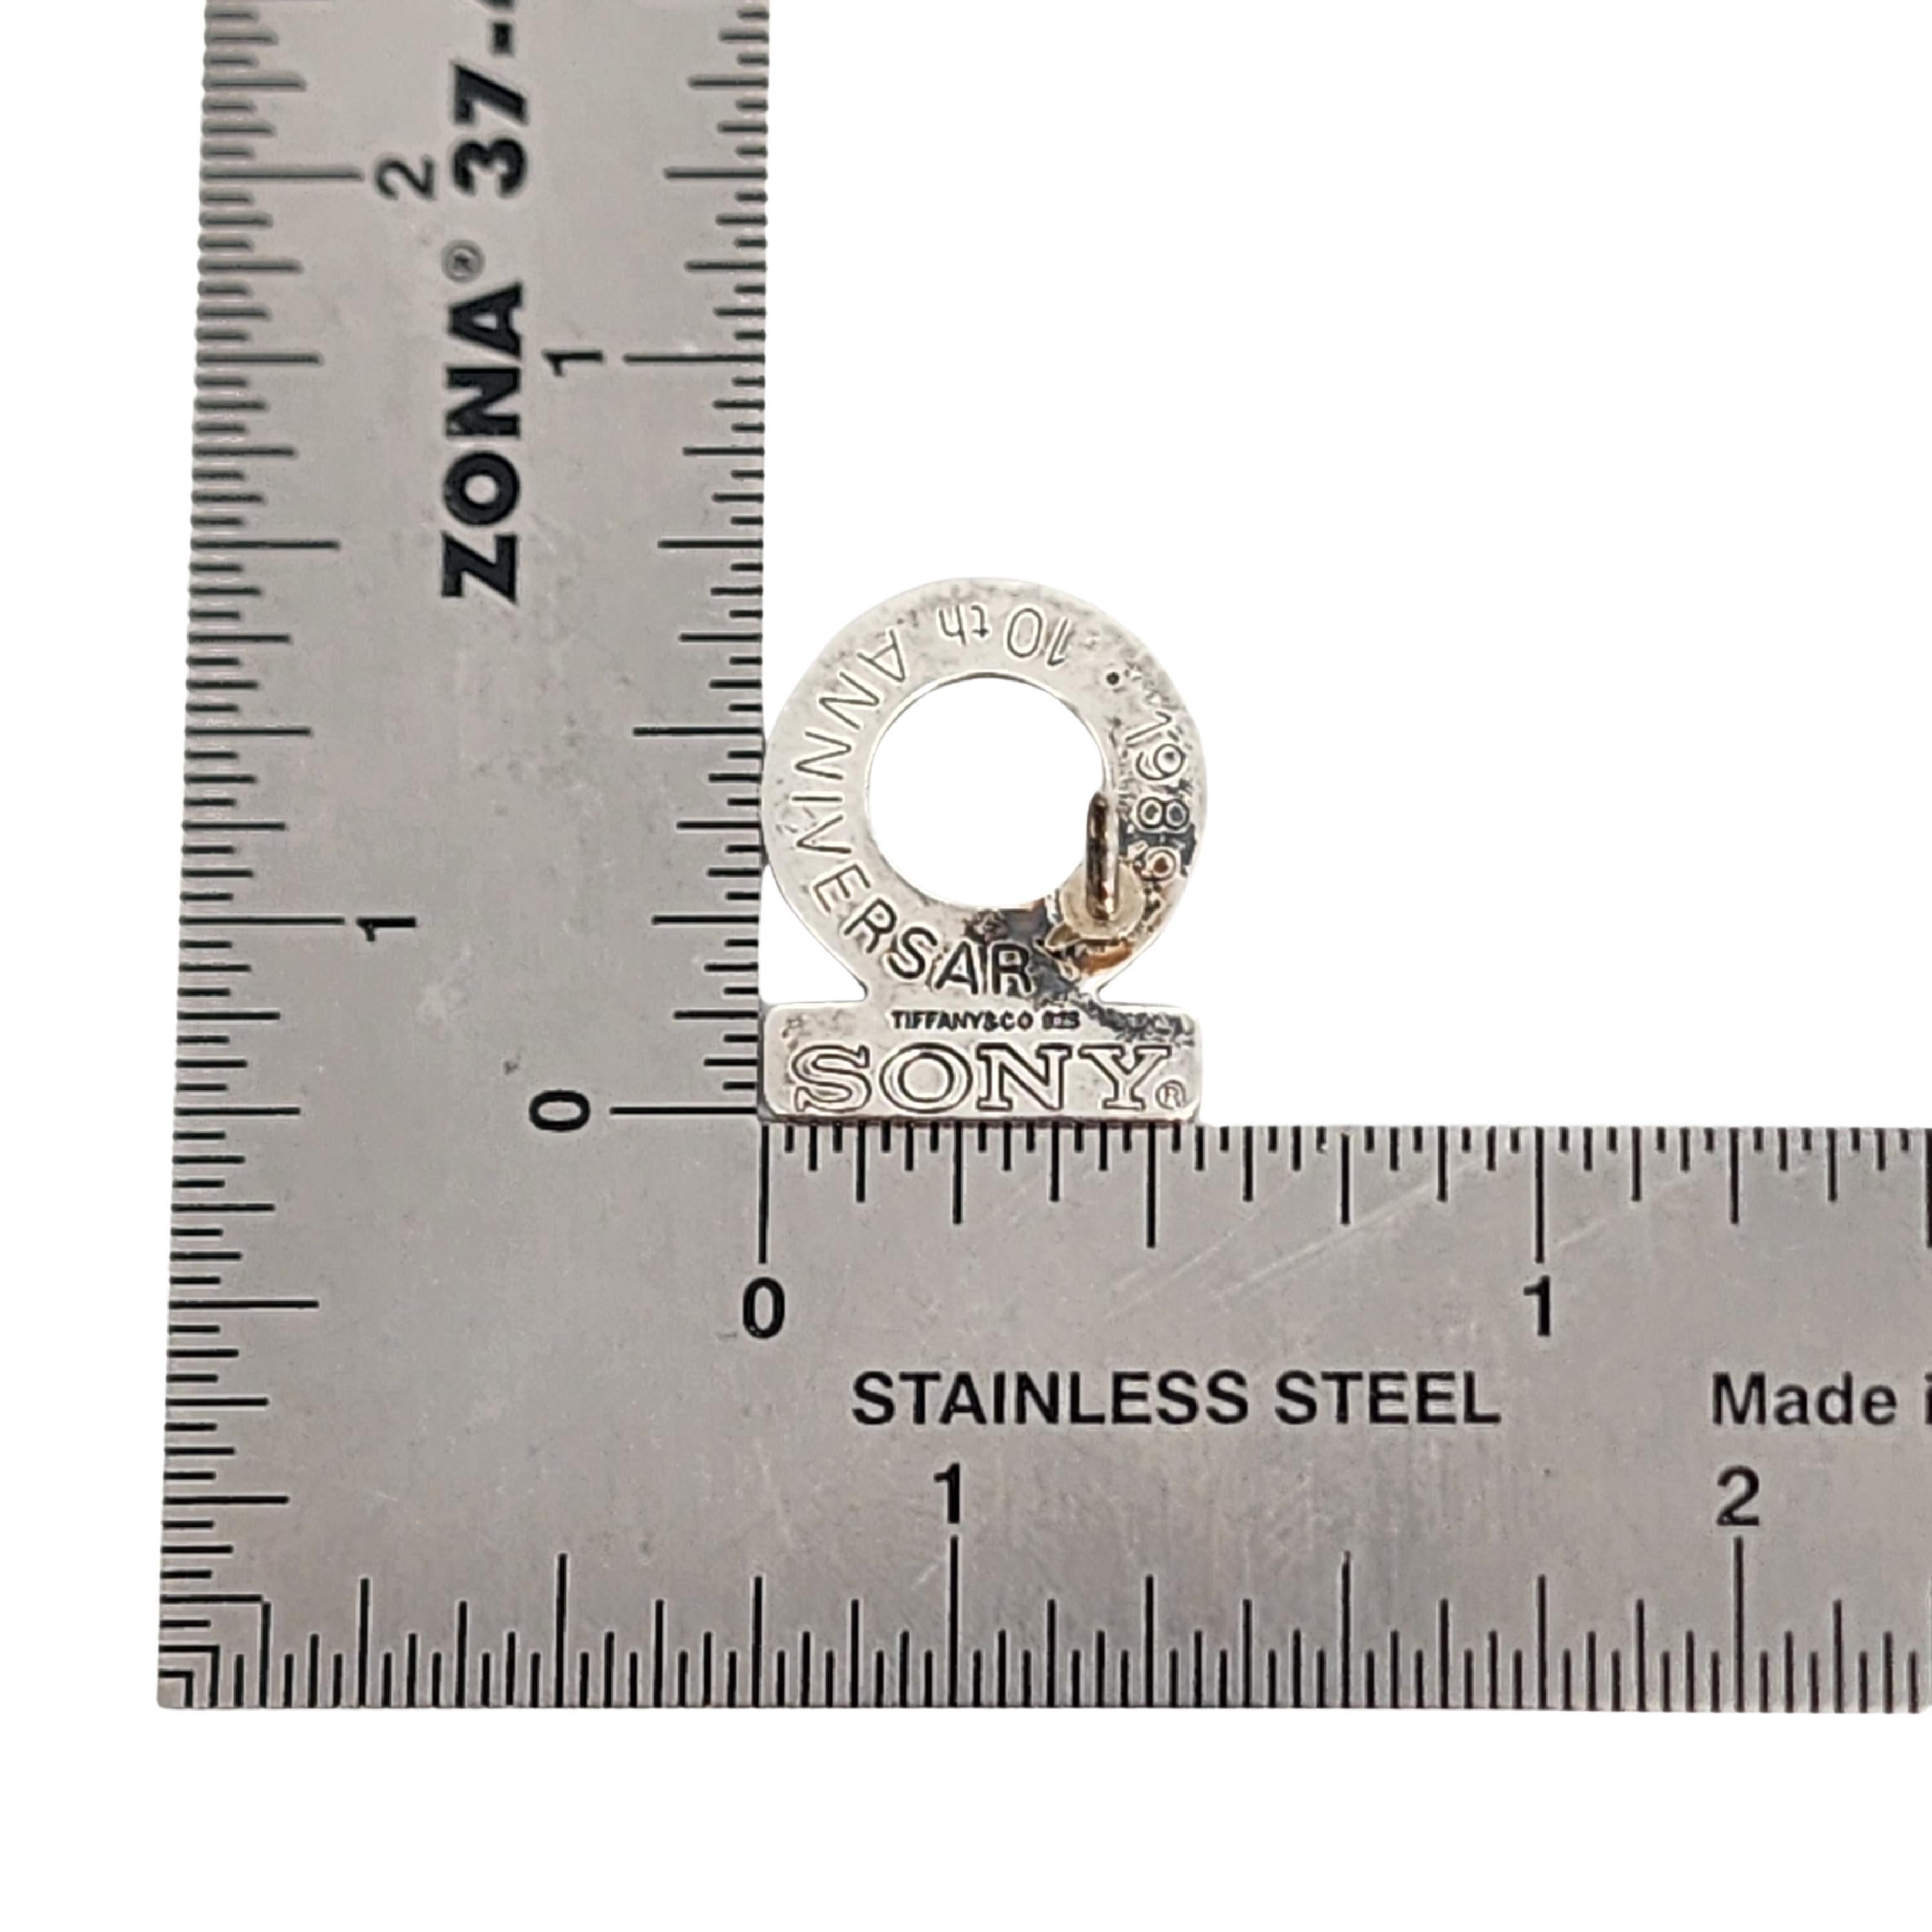 Tiffany & Co Sterling Silver Sony Walkman 10th Anniversary Tie Tack Pin #15853 2